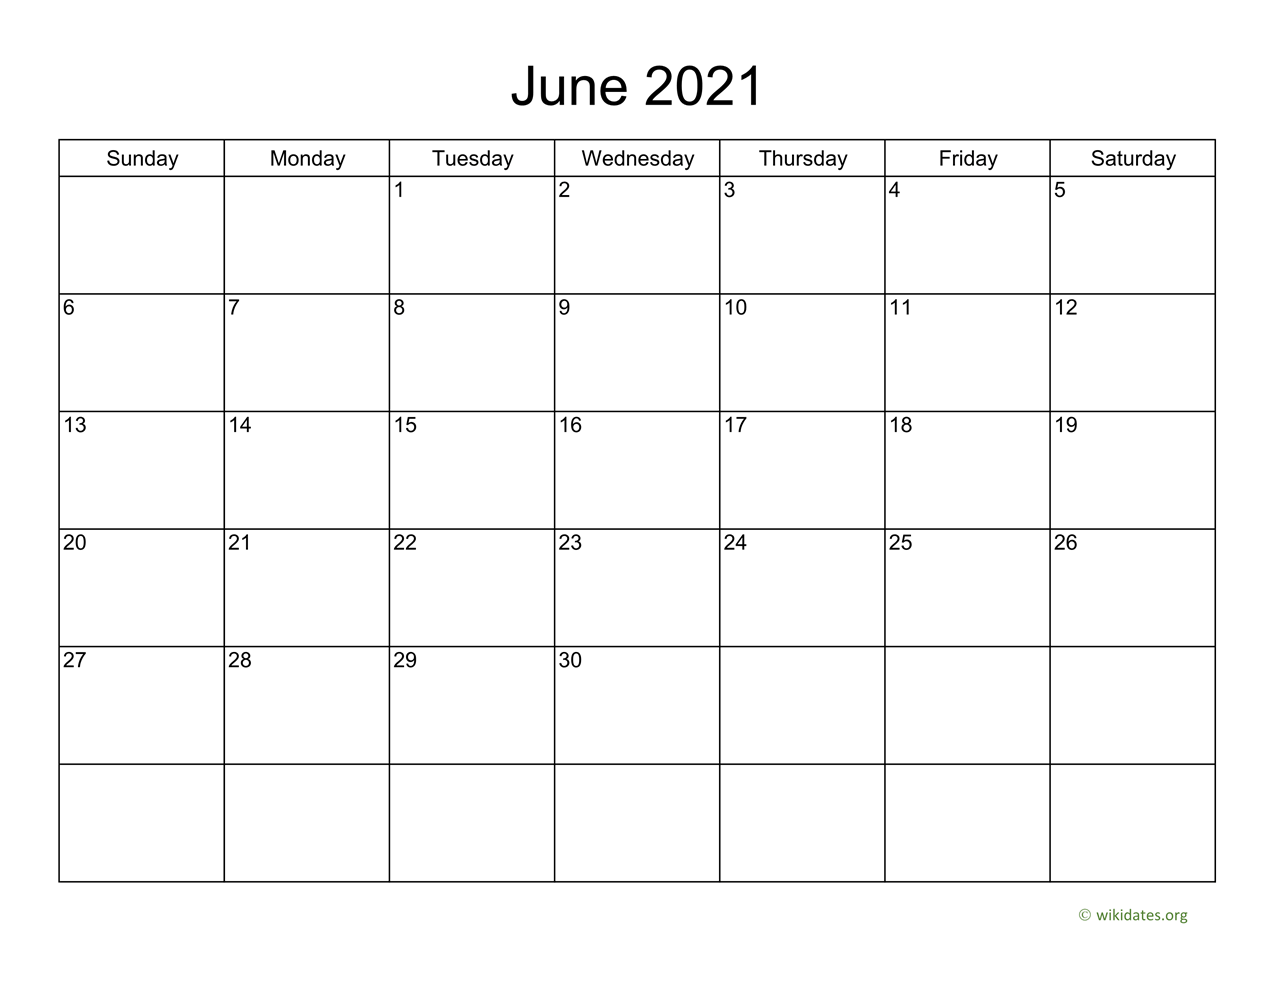 June 2021 kalender June 2021